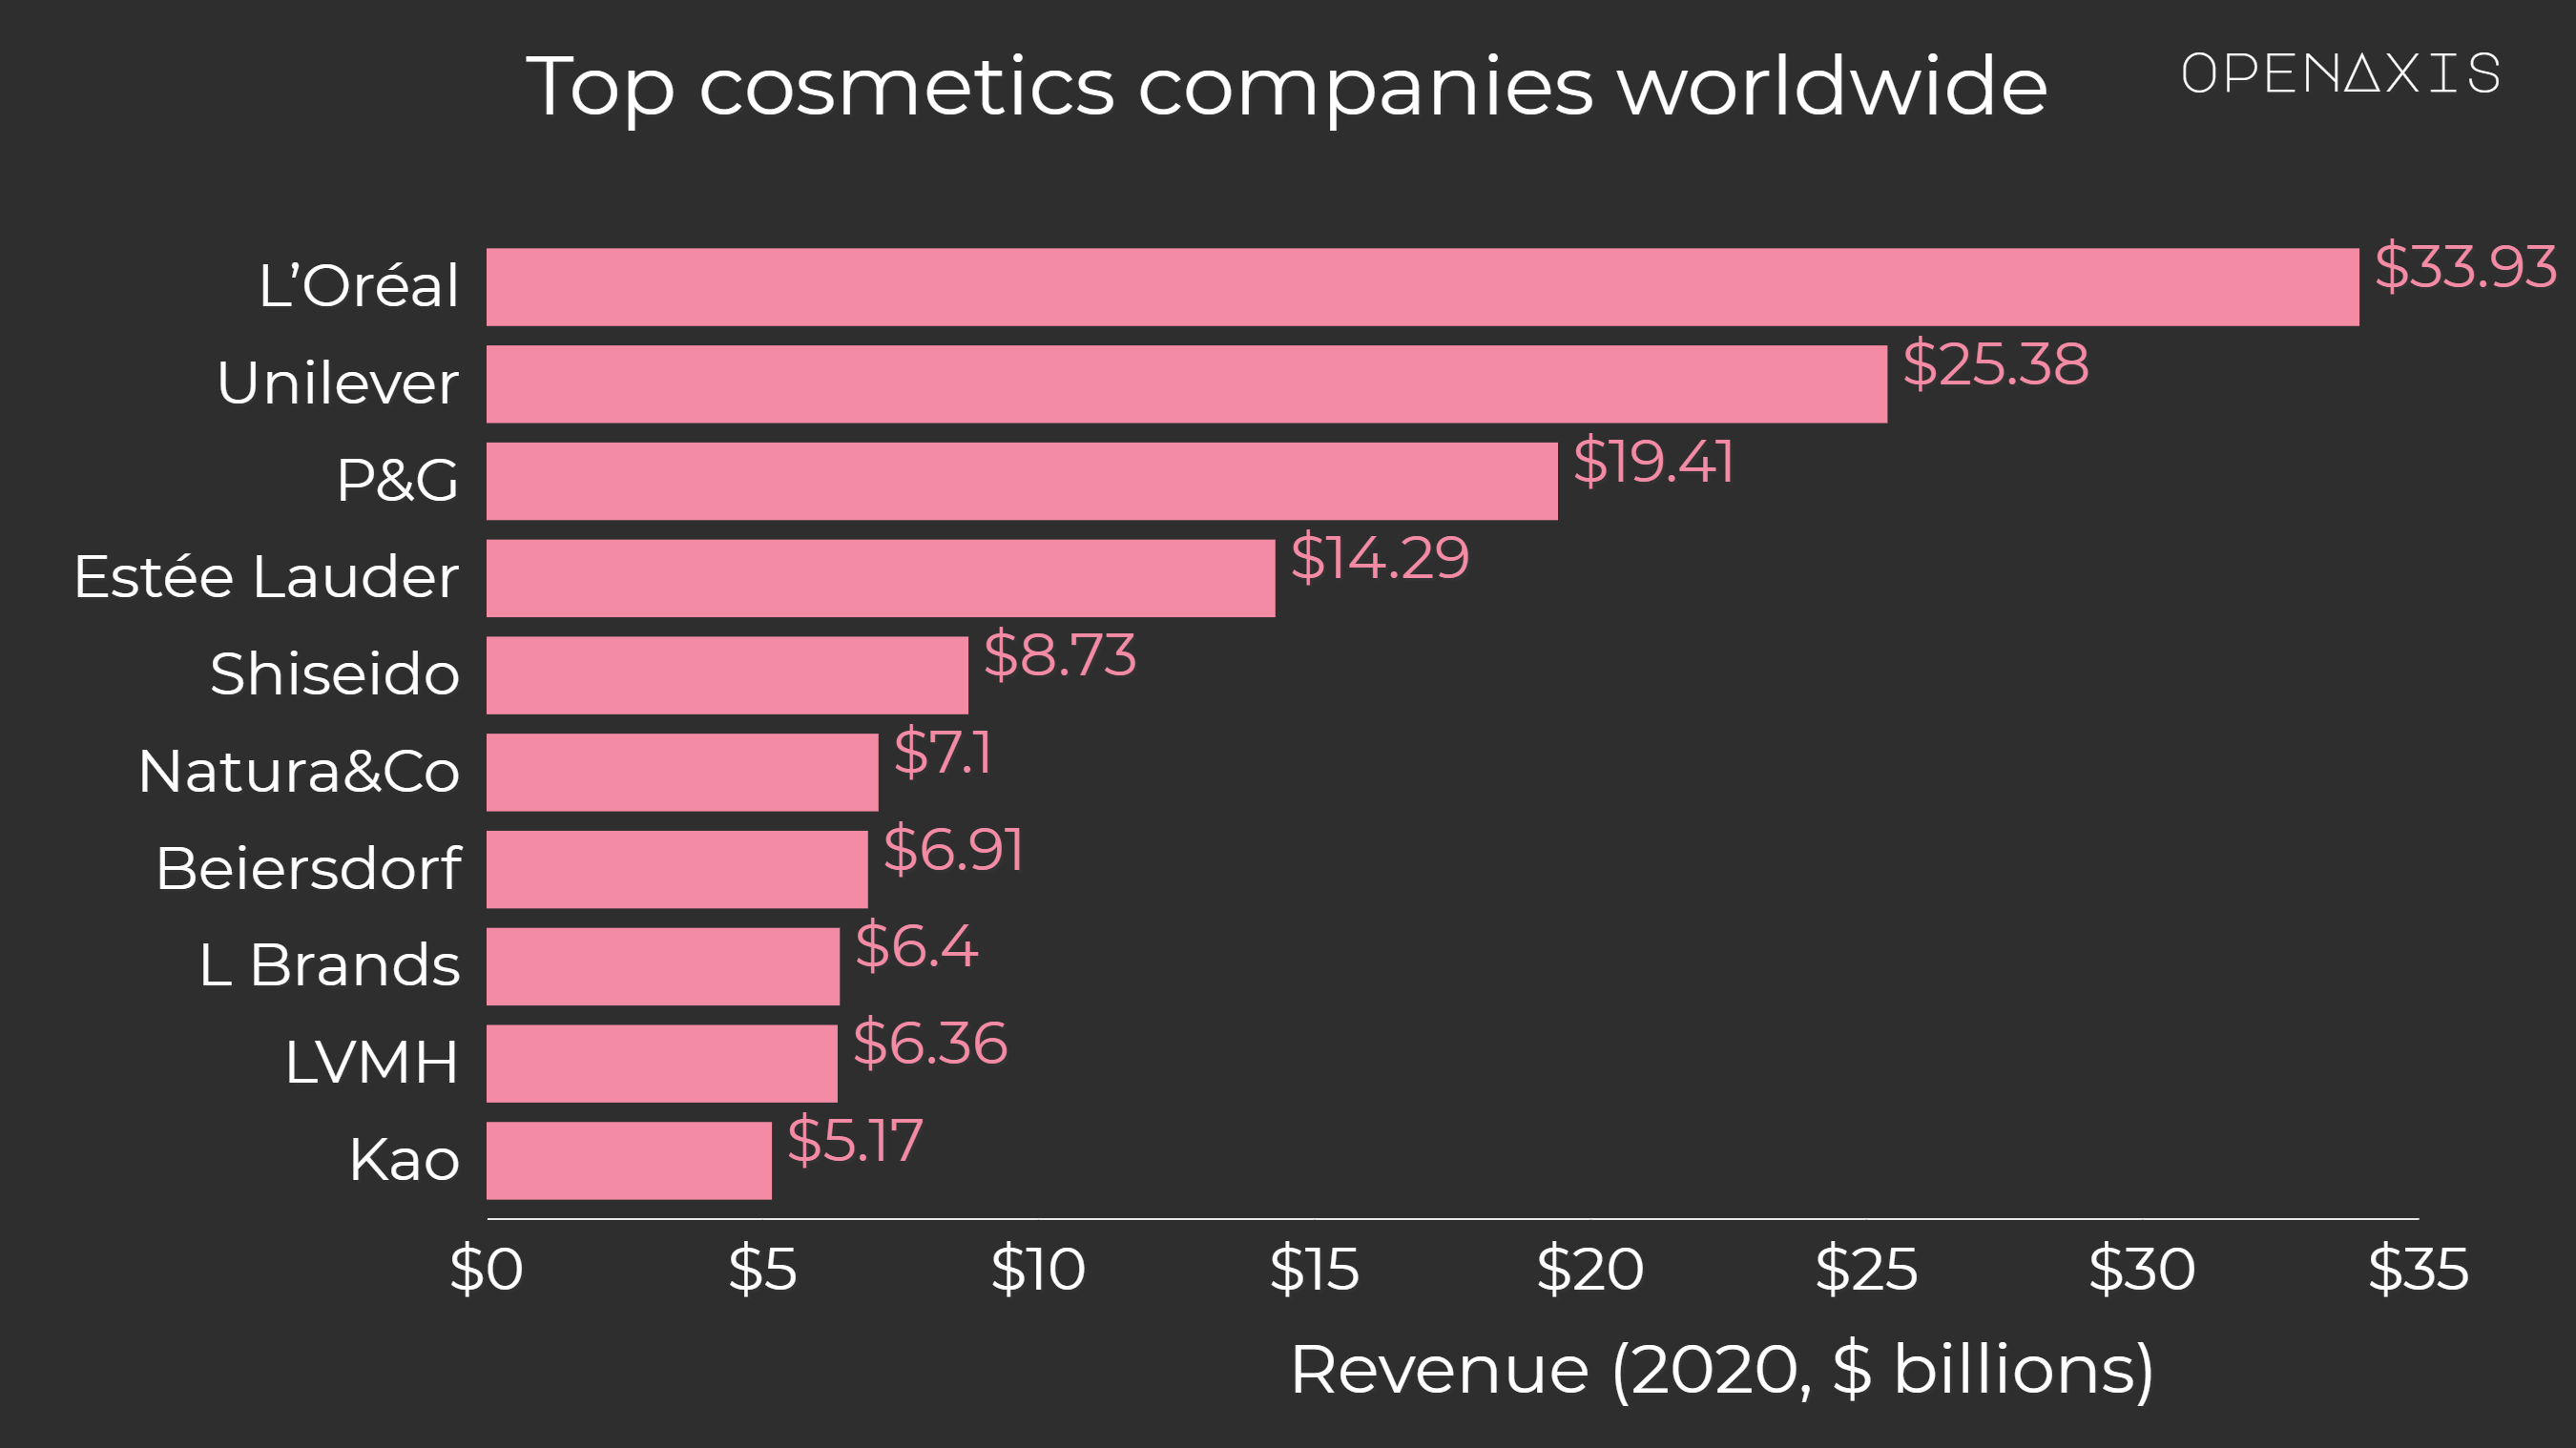 "Top cosmetics companies worldwide"